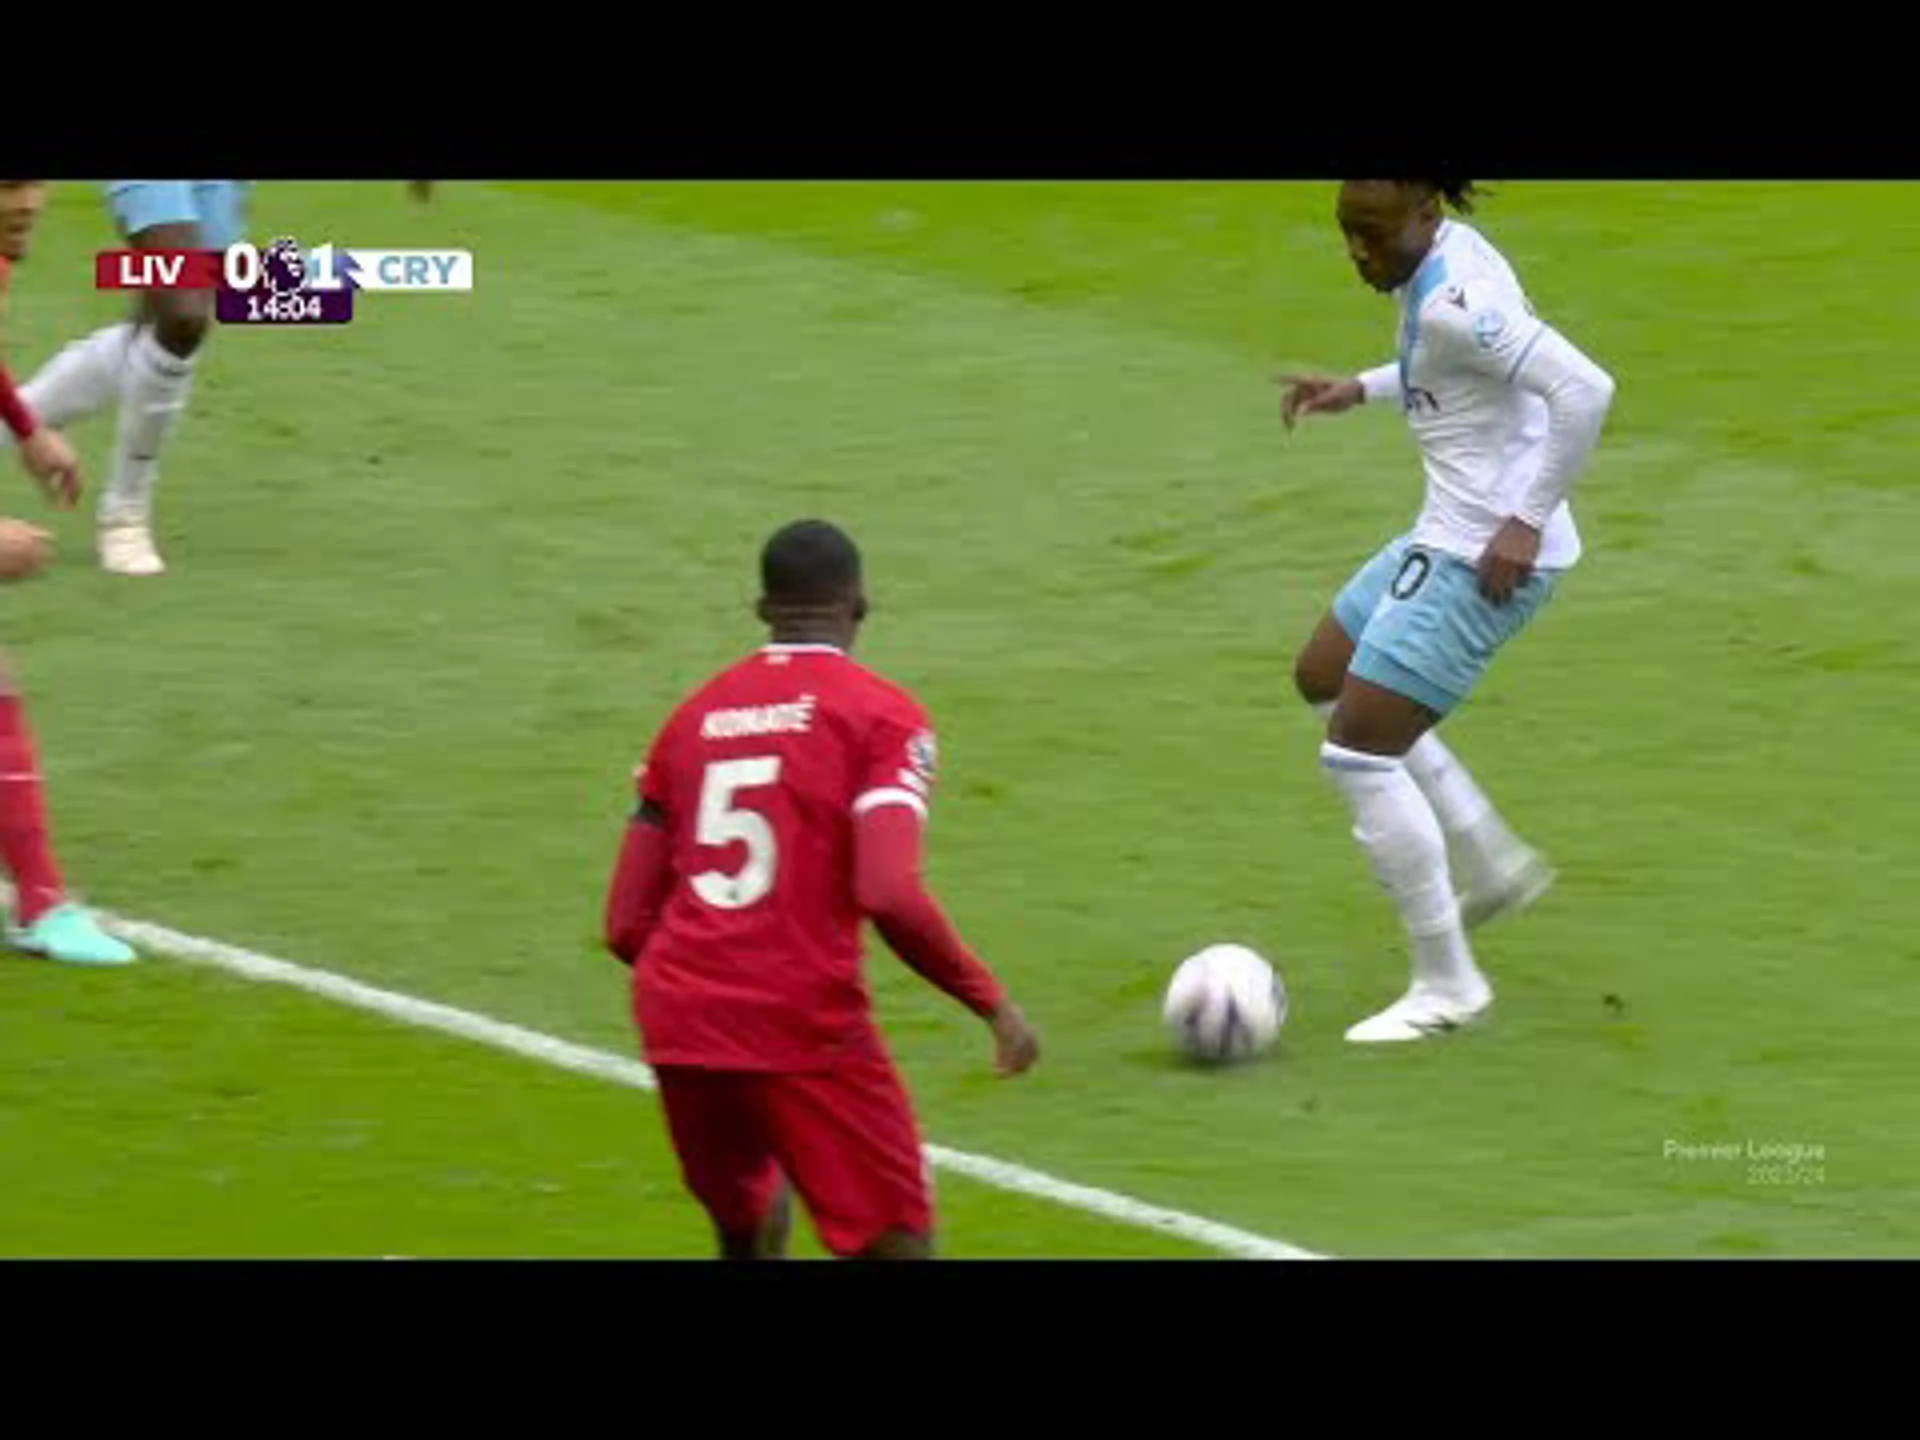 Eberechi Eze | 14ᵗʰ Minute Goal v Liverpool